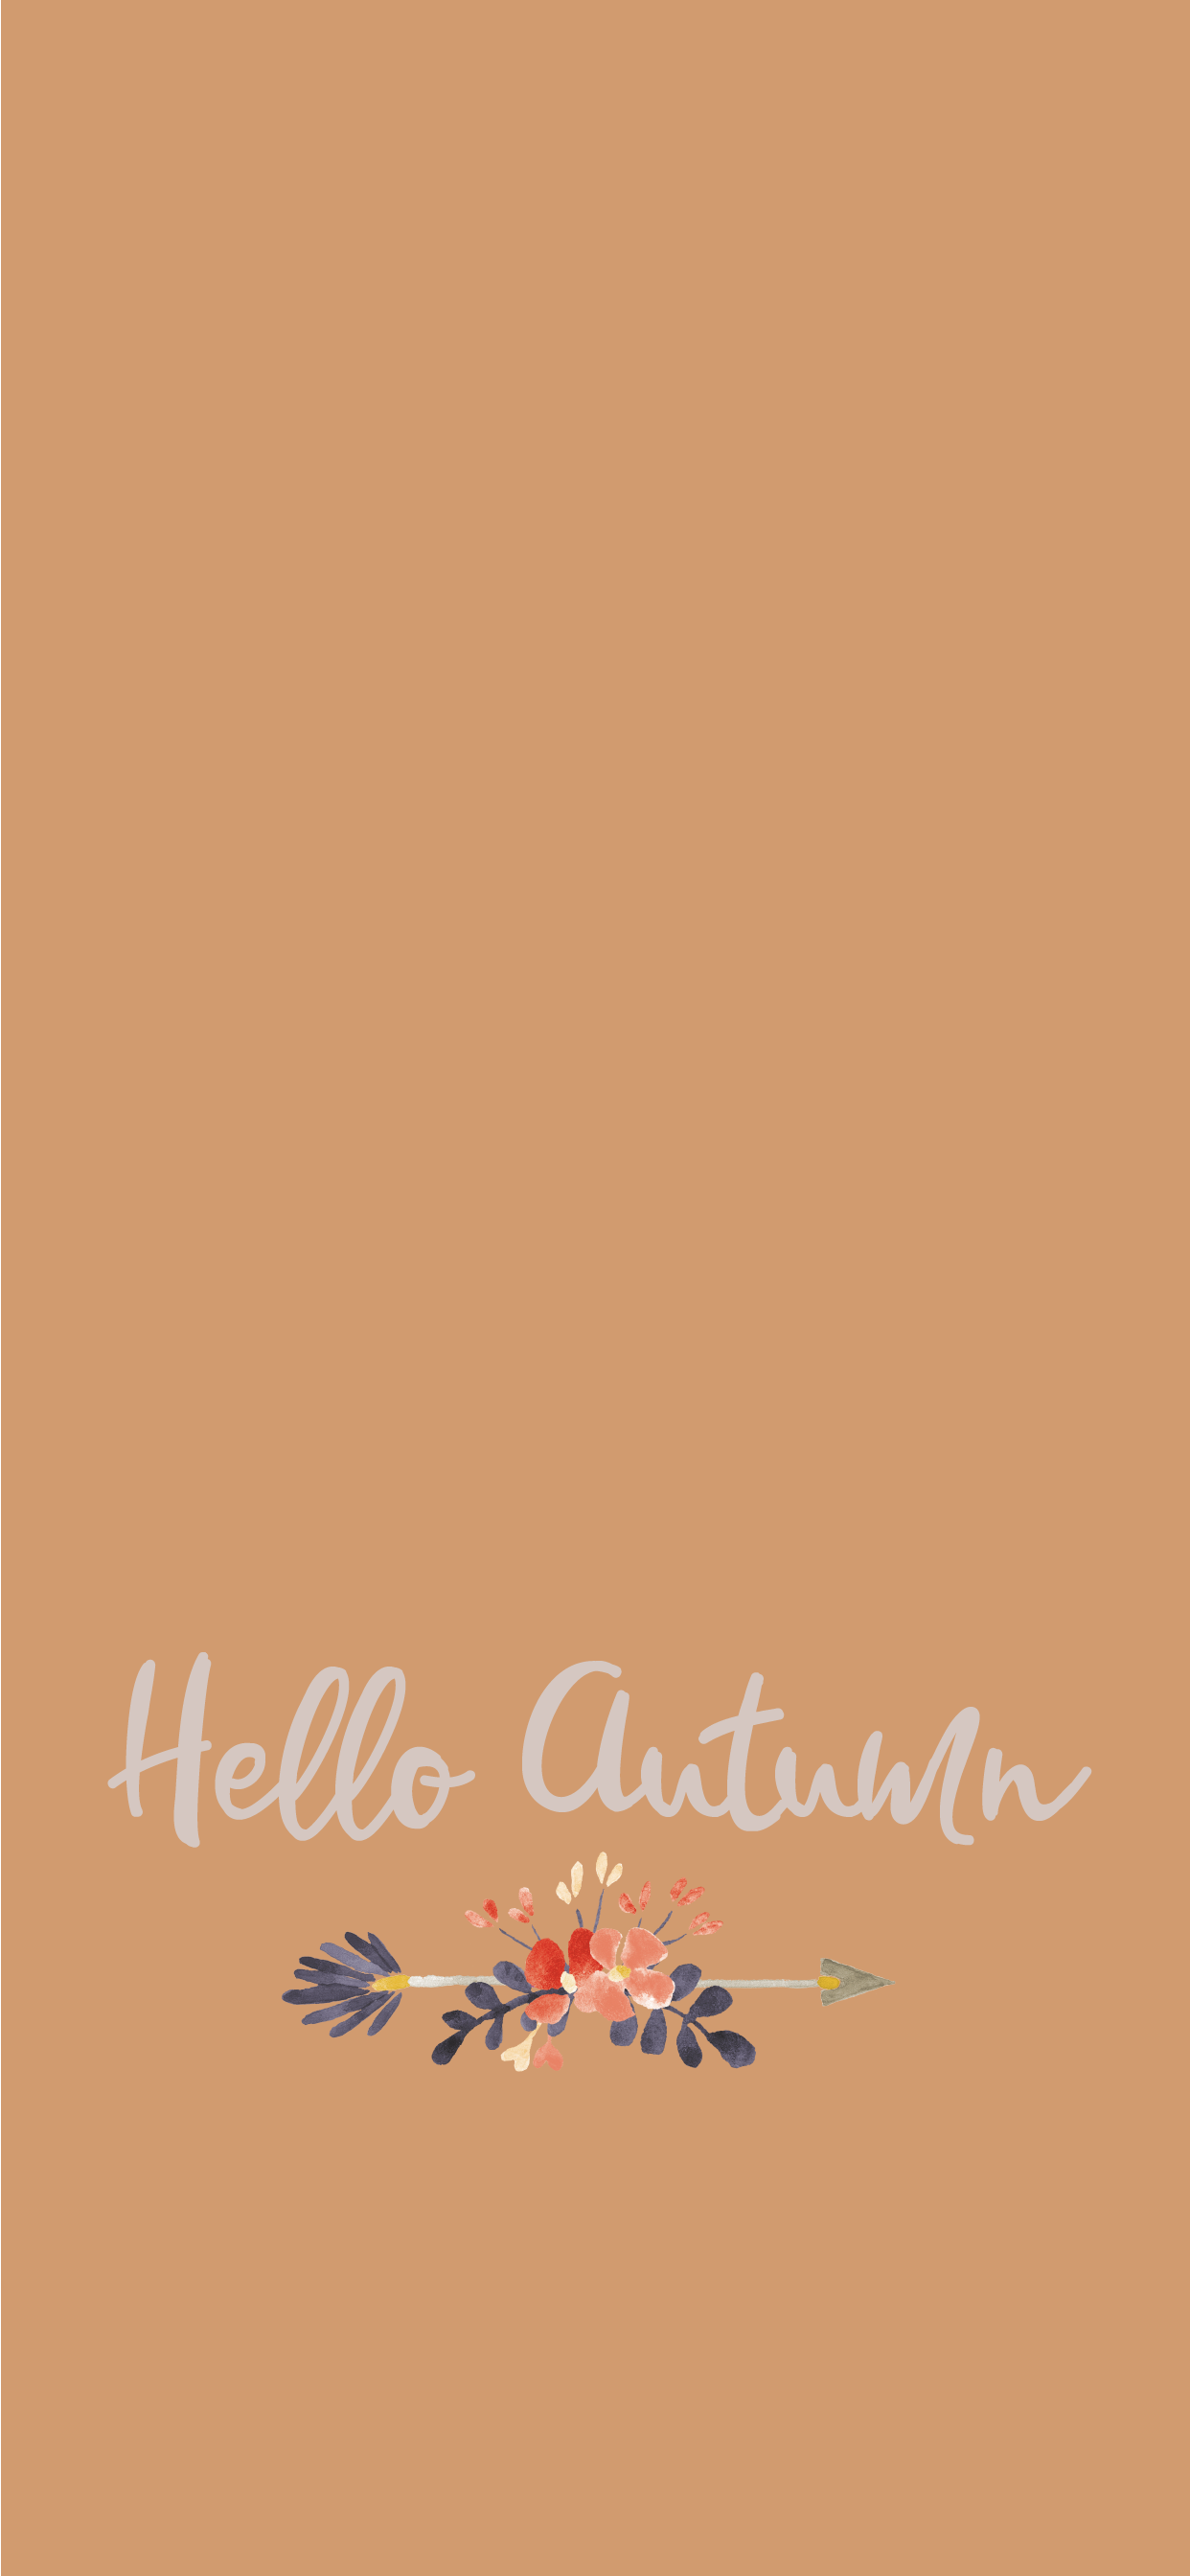 Hello Autumn iPhone Wallpaper Free Hello Autumn iPhone Background